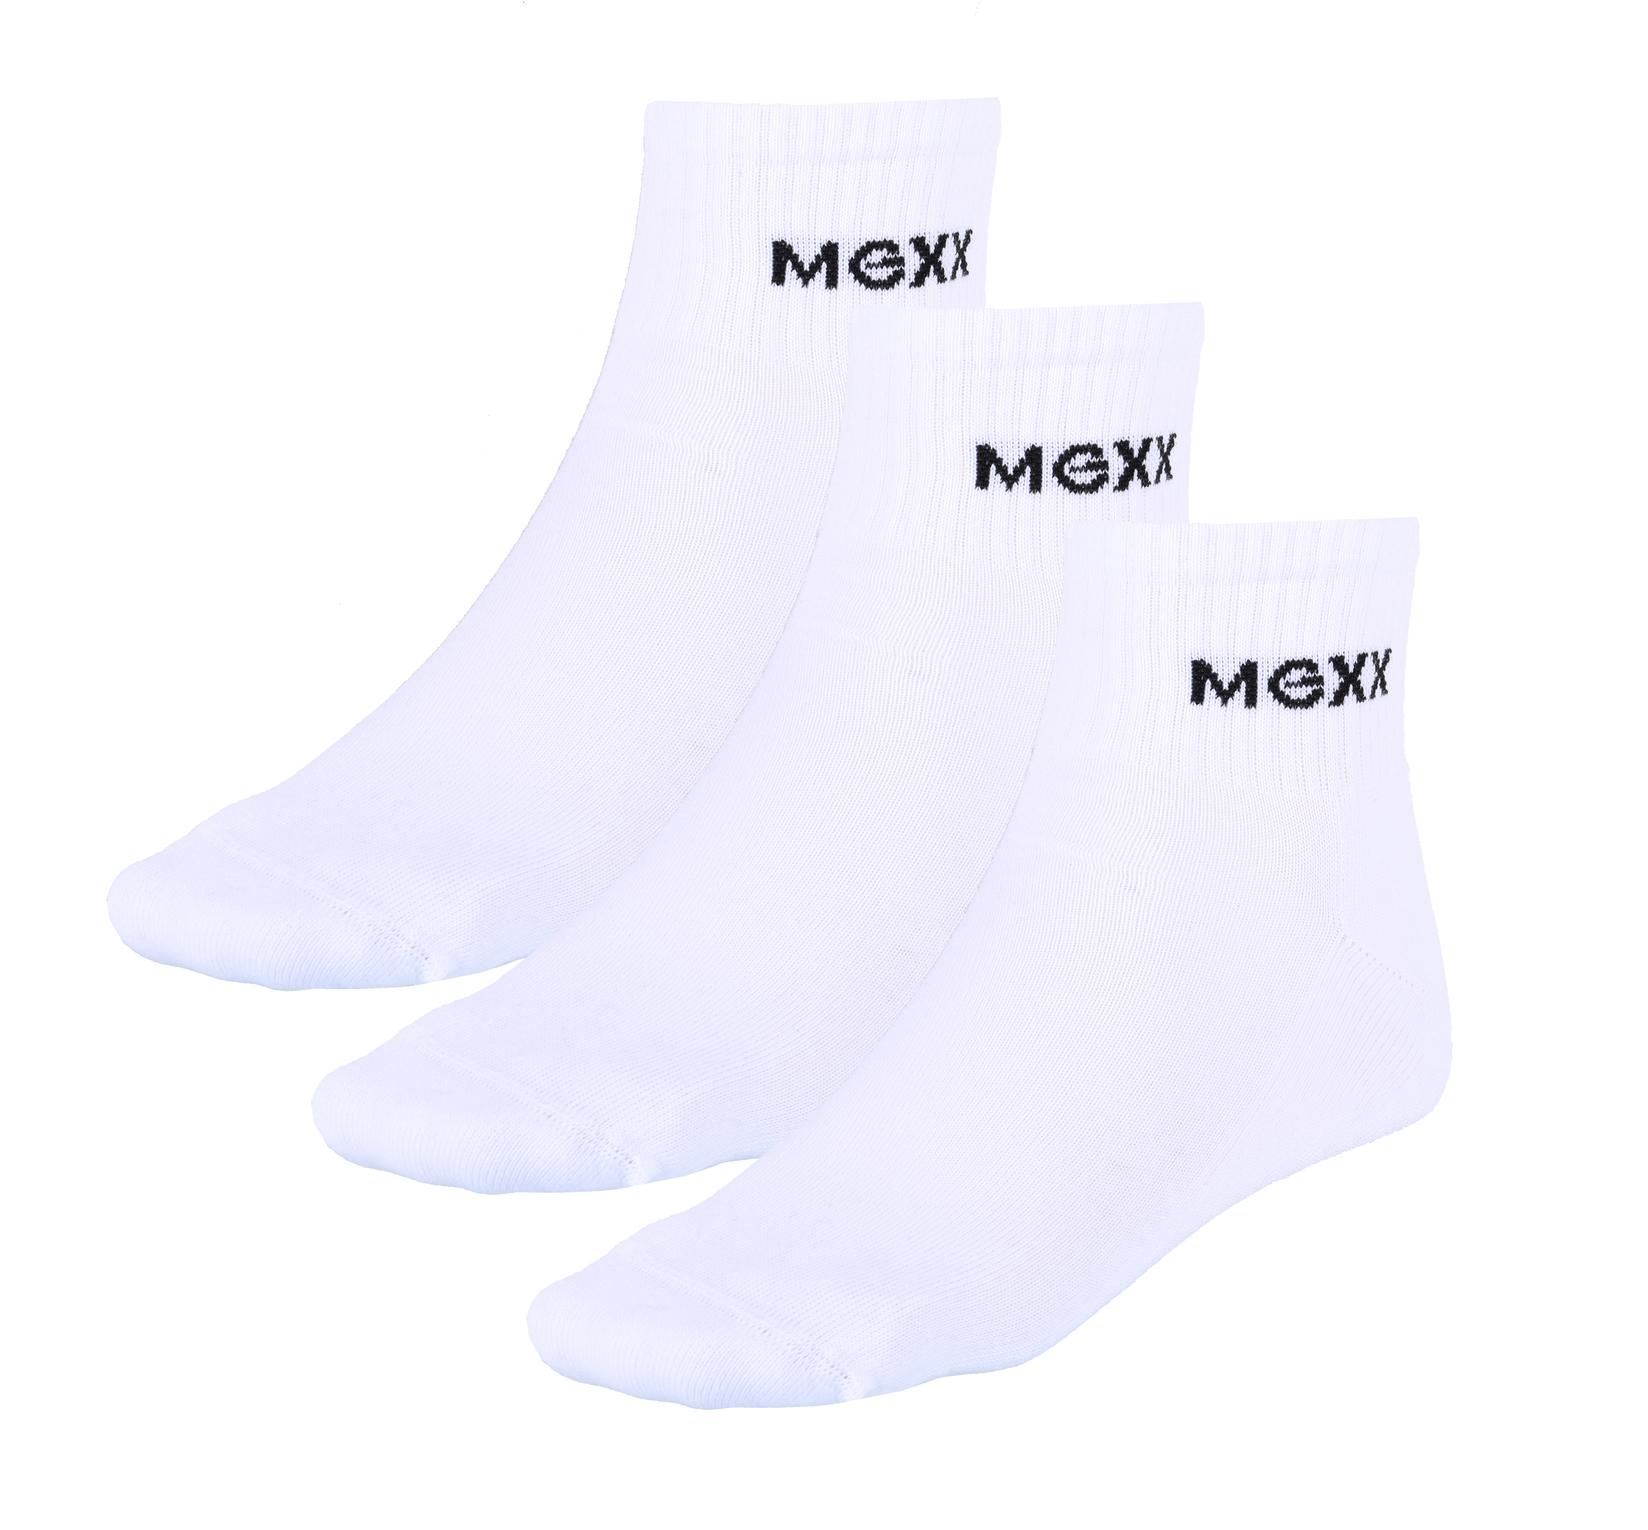 Selected image for MEXX Sportske čarape Quarter, Pakovanje od 3 para, Bele